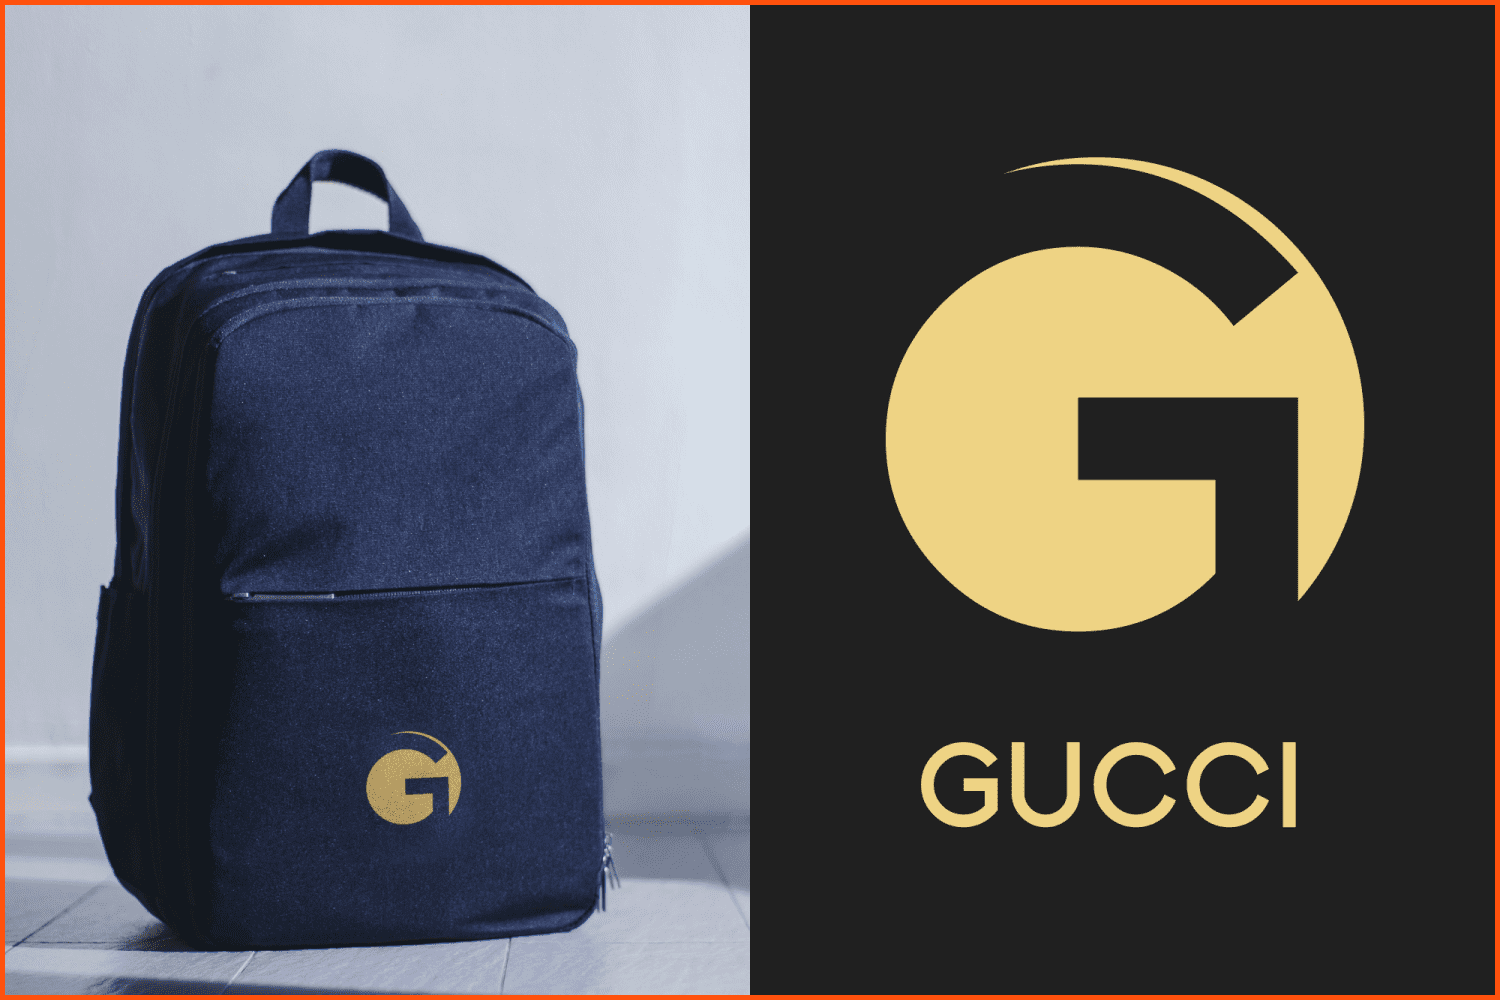 Gucci: the logo's history